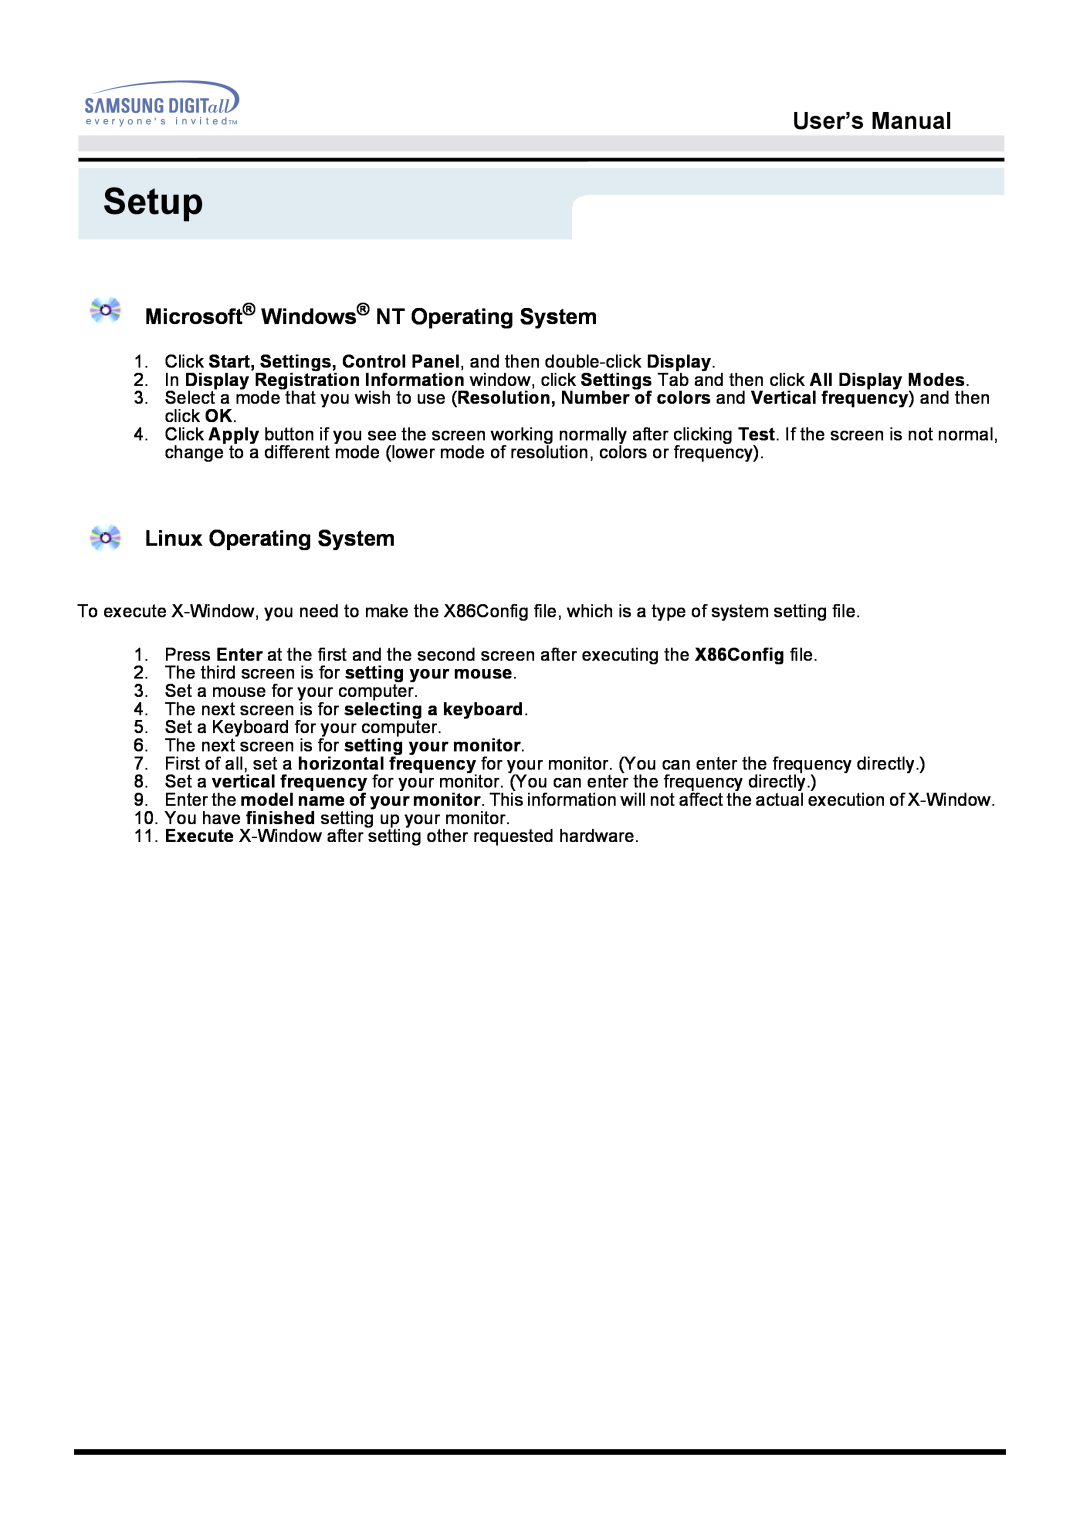 Samsung 151D user manual Setup, User’s Manual, Microsoft Windows NT Operating System, Linux Operating System 